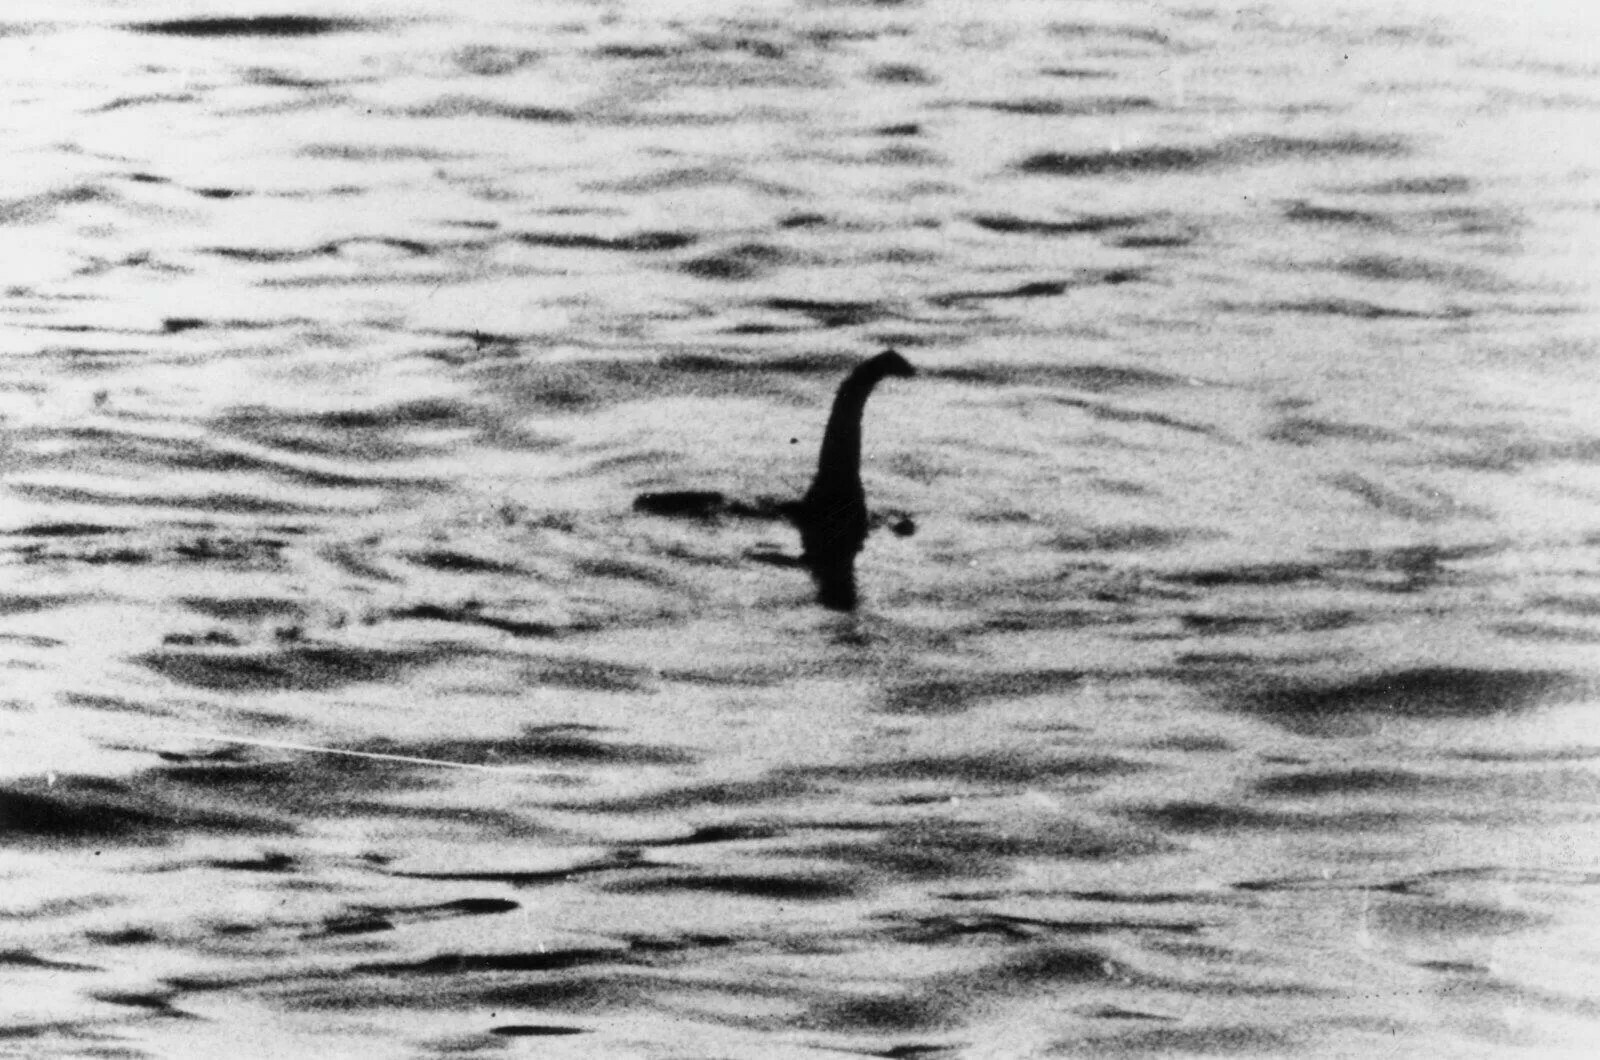 尼斯湖水怪（Loch Ness Monster），也被称为“Nessie”